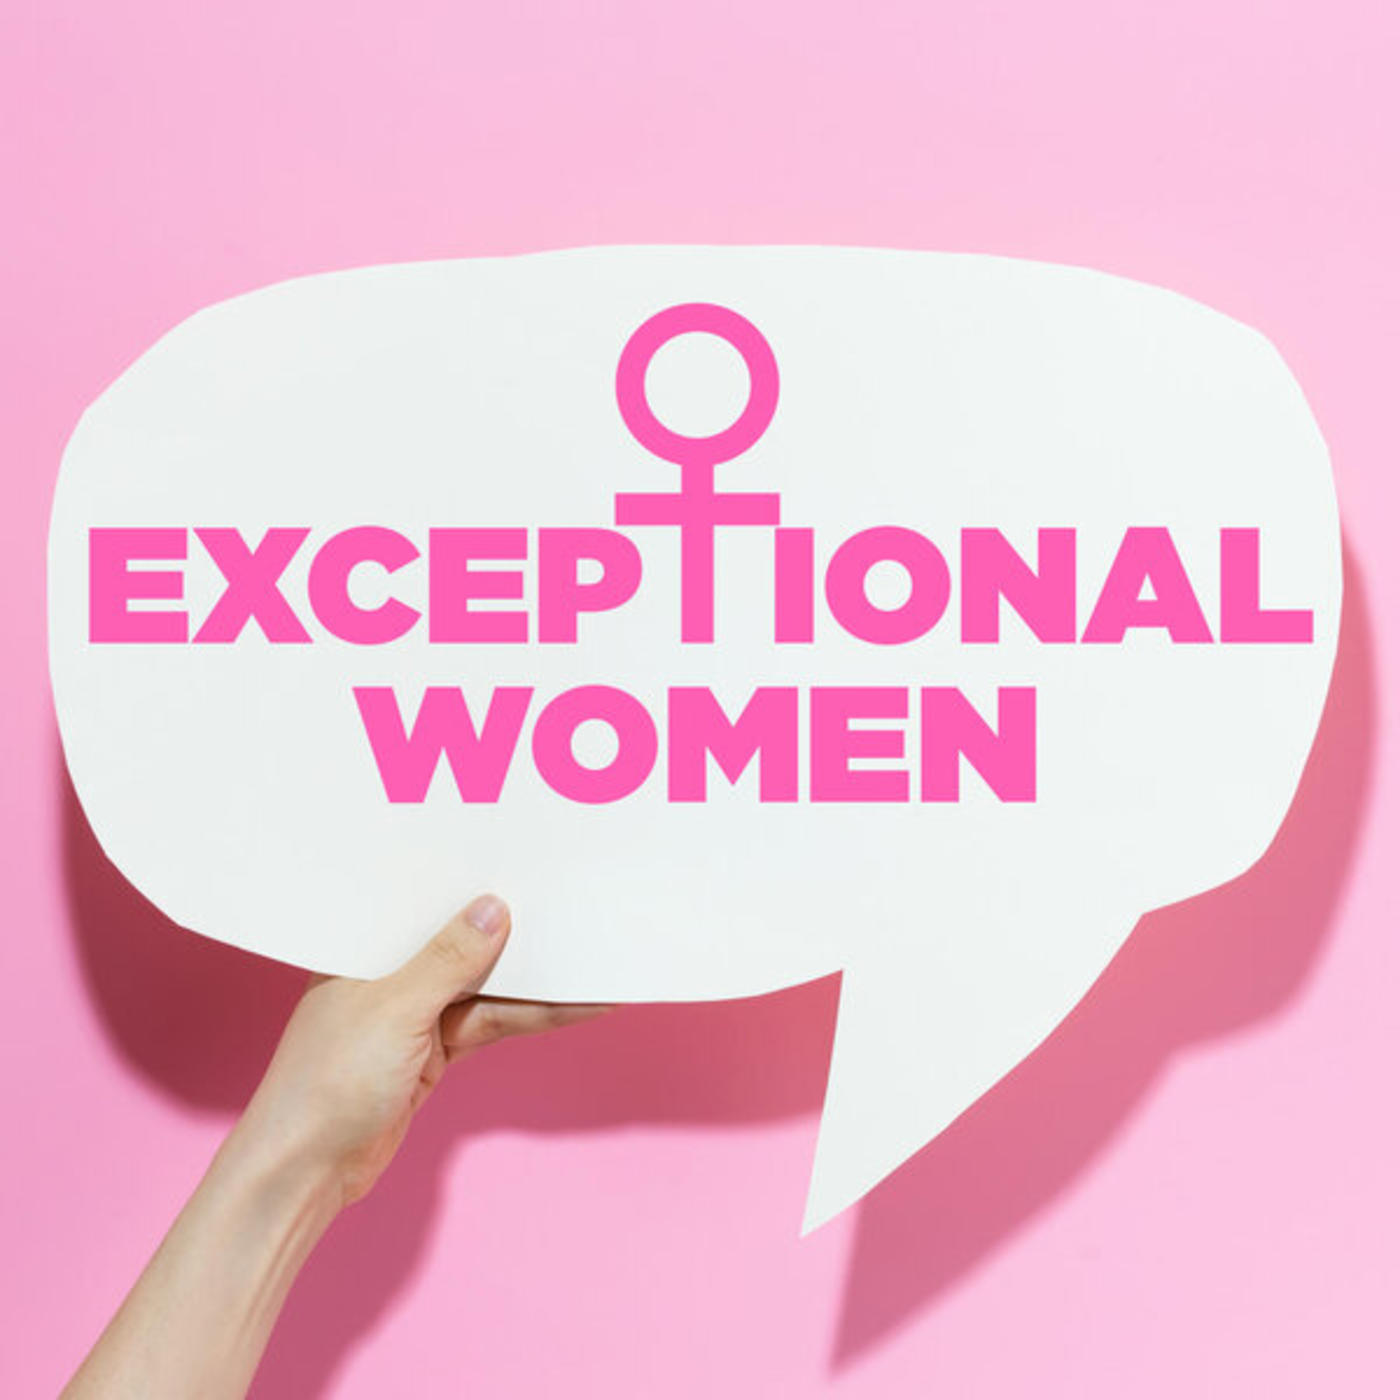 Exceptional Women logo